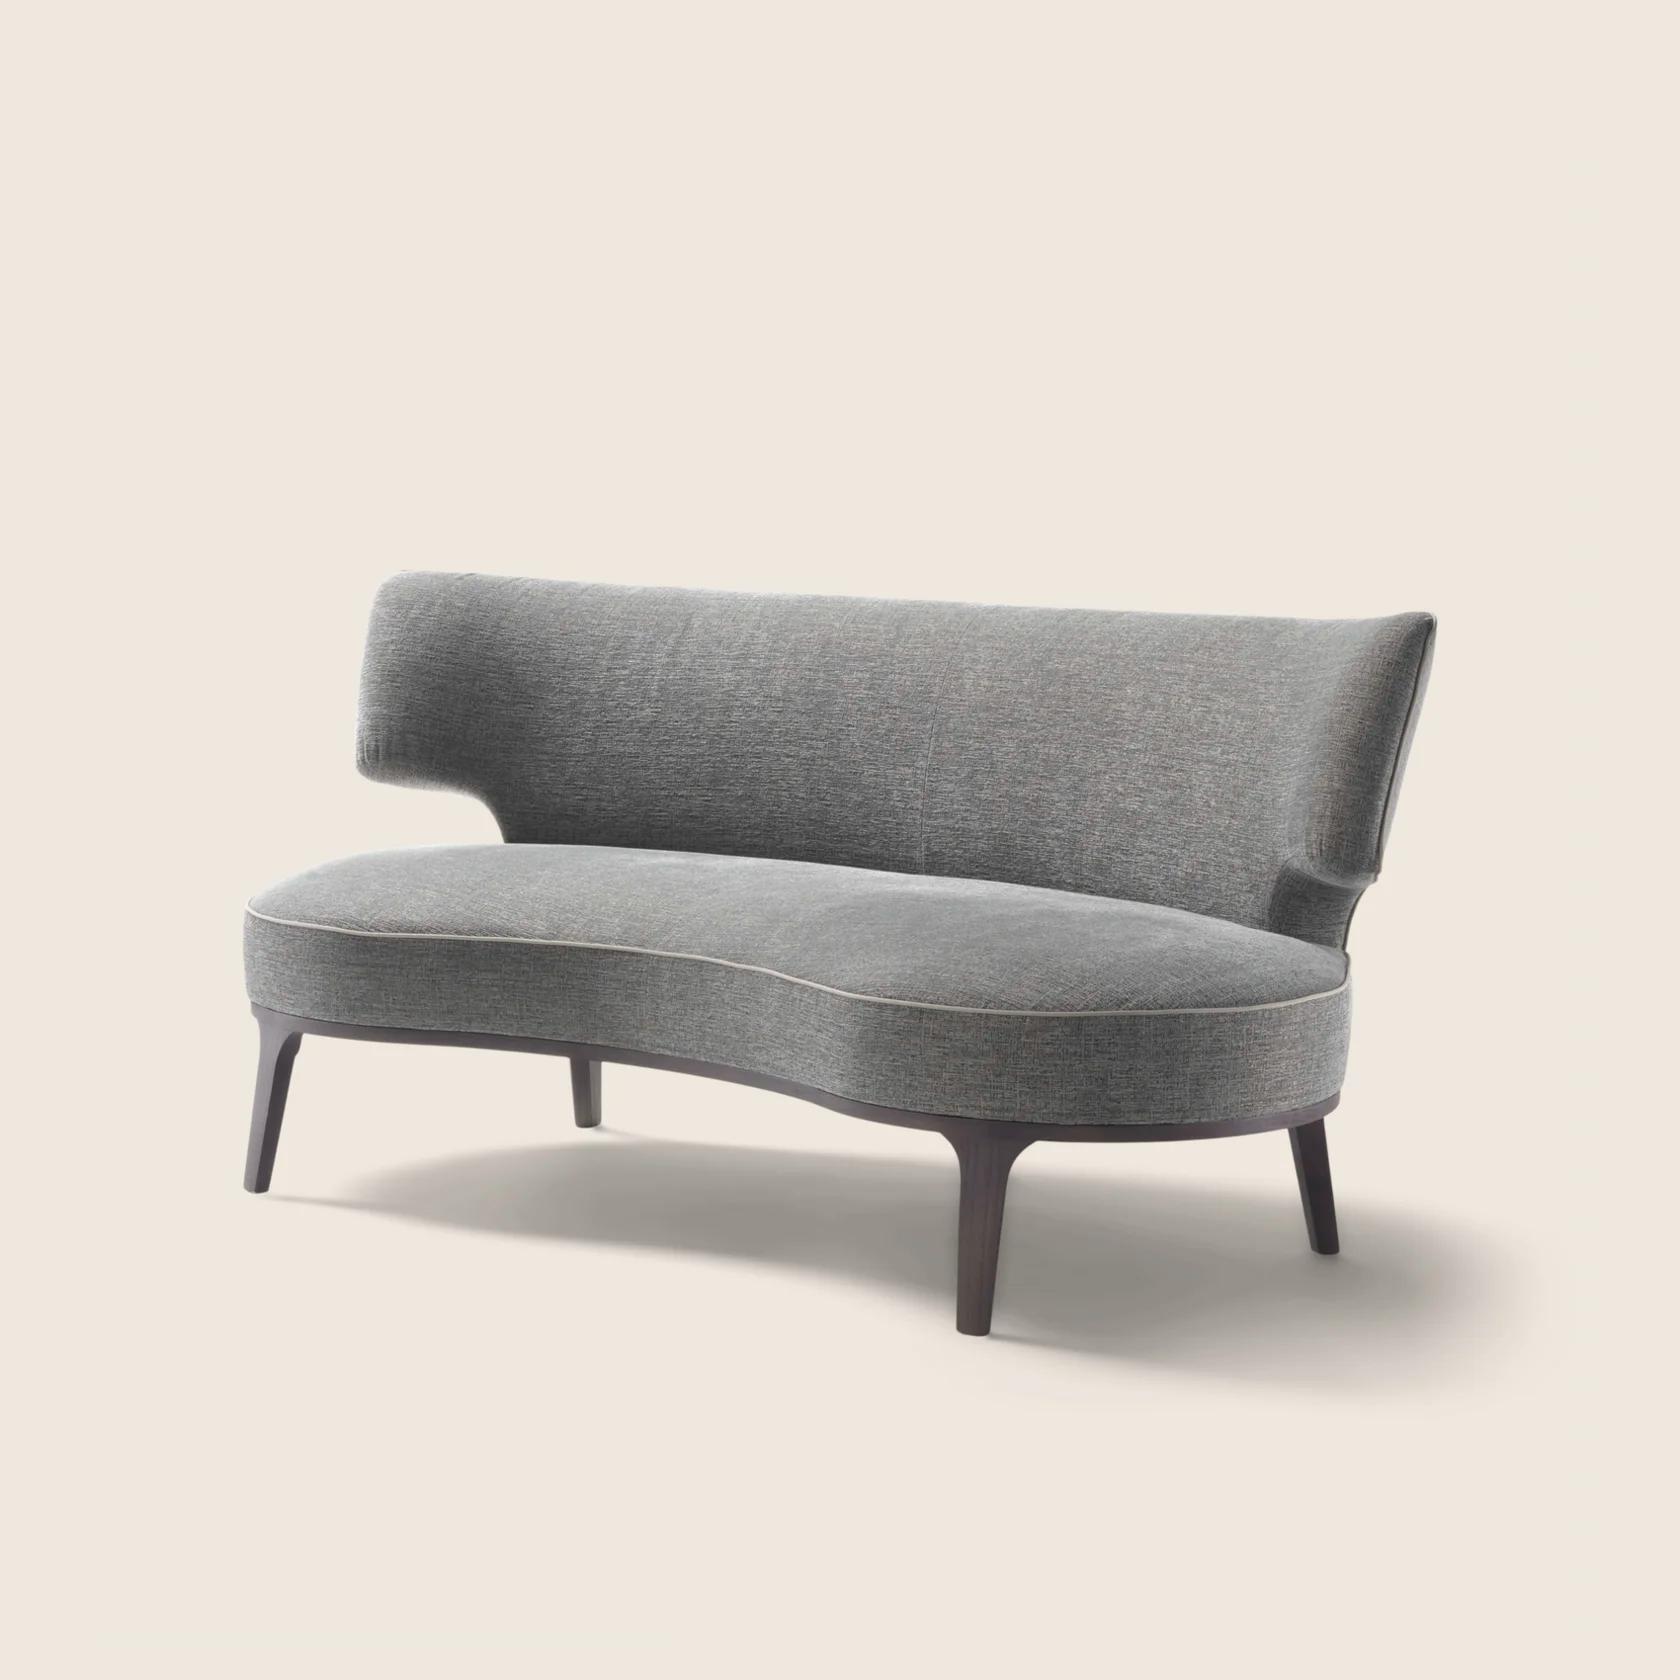 DROP Sofas | Design Made - Flexform in Italy